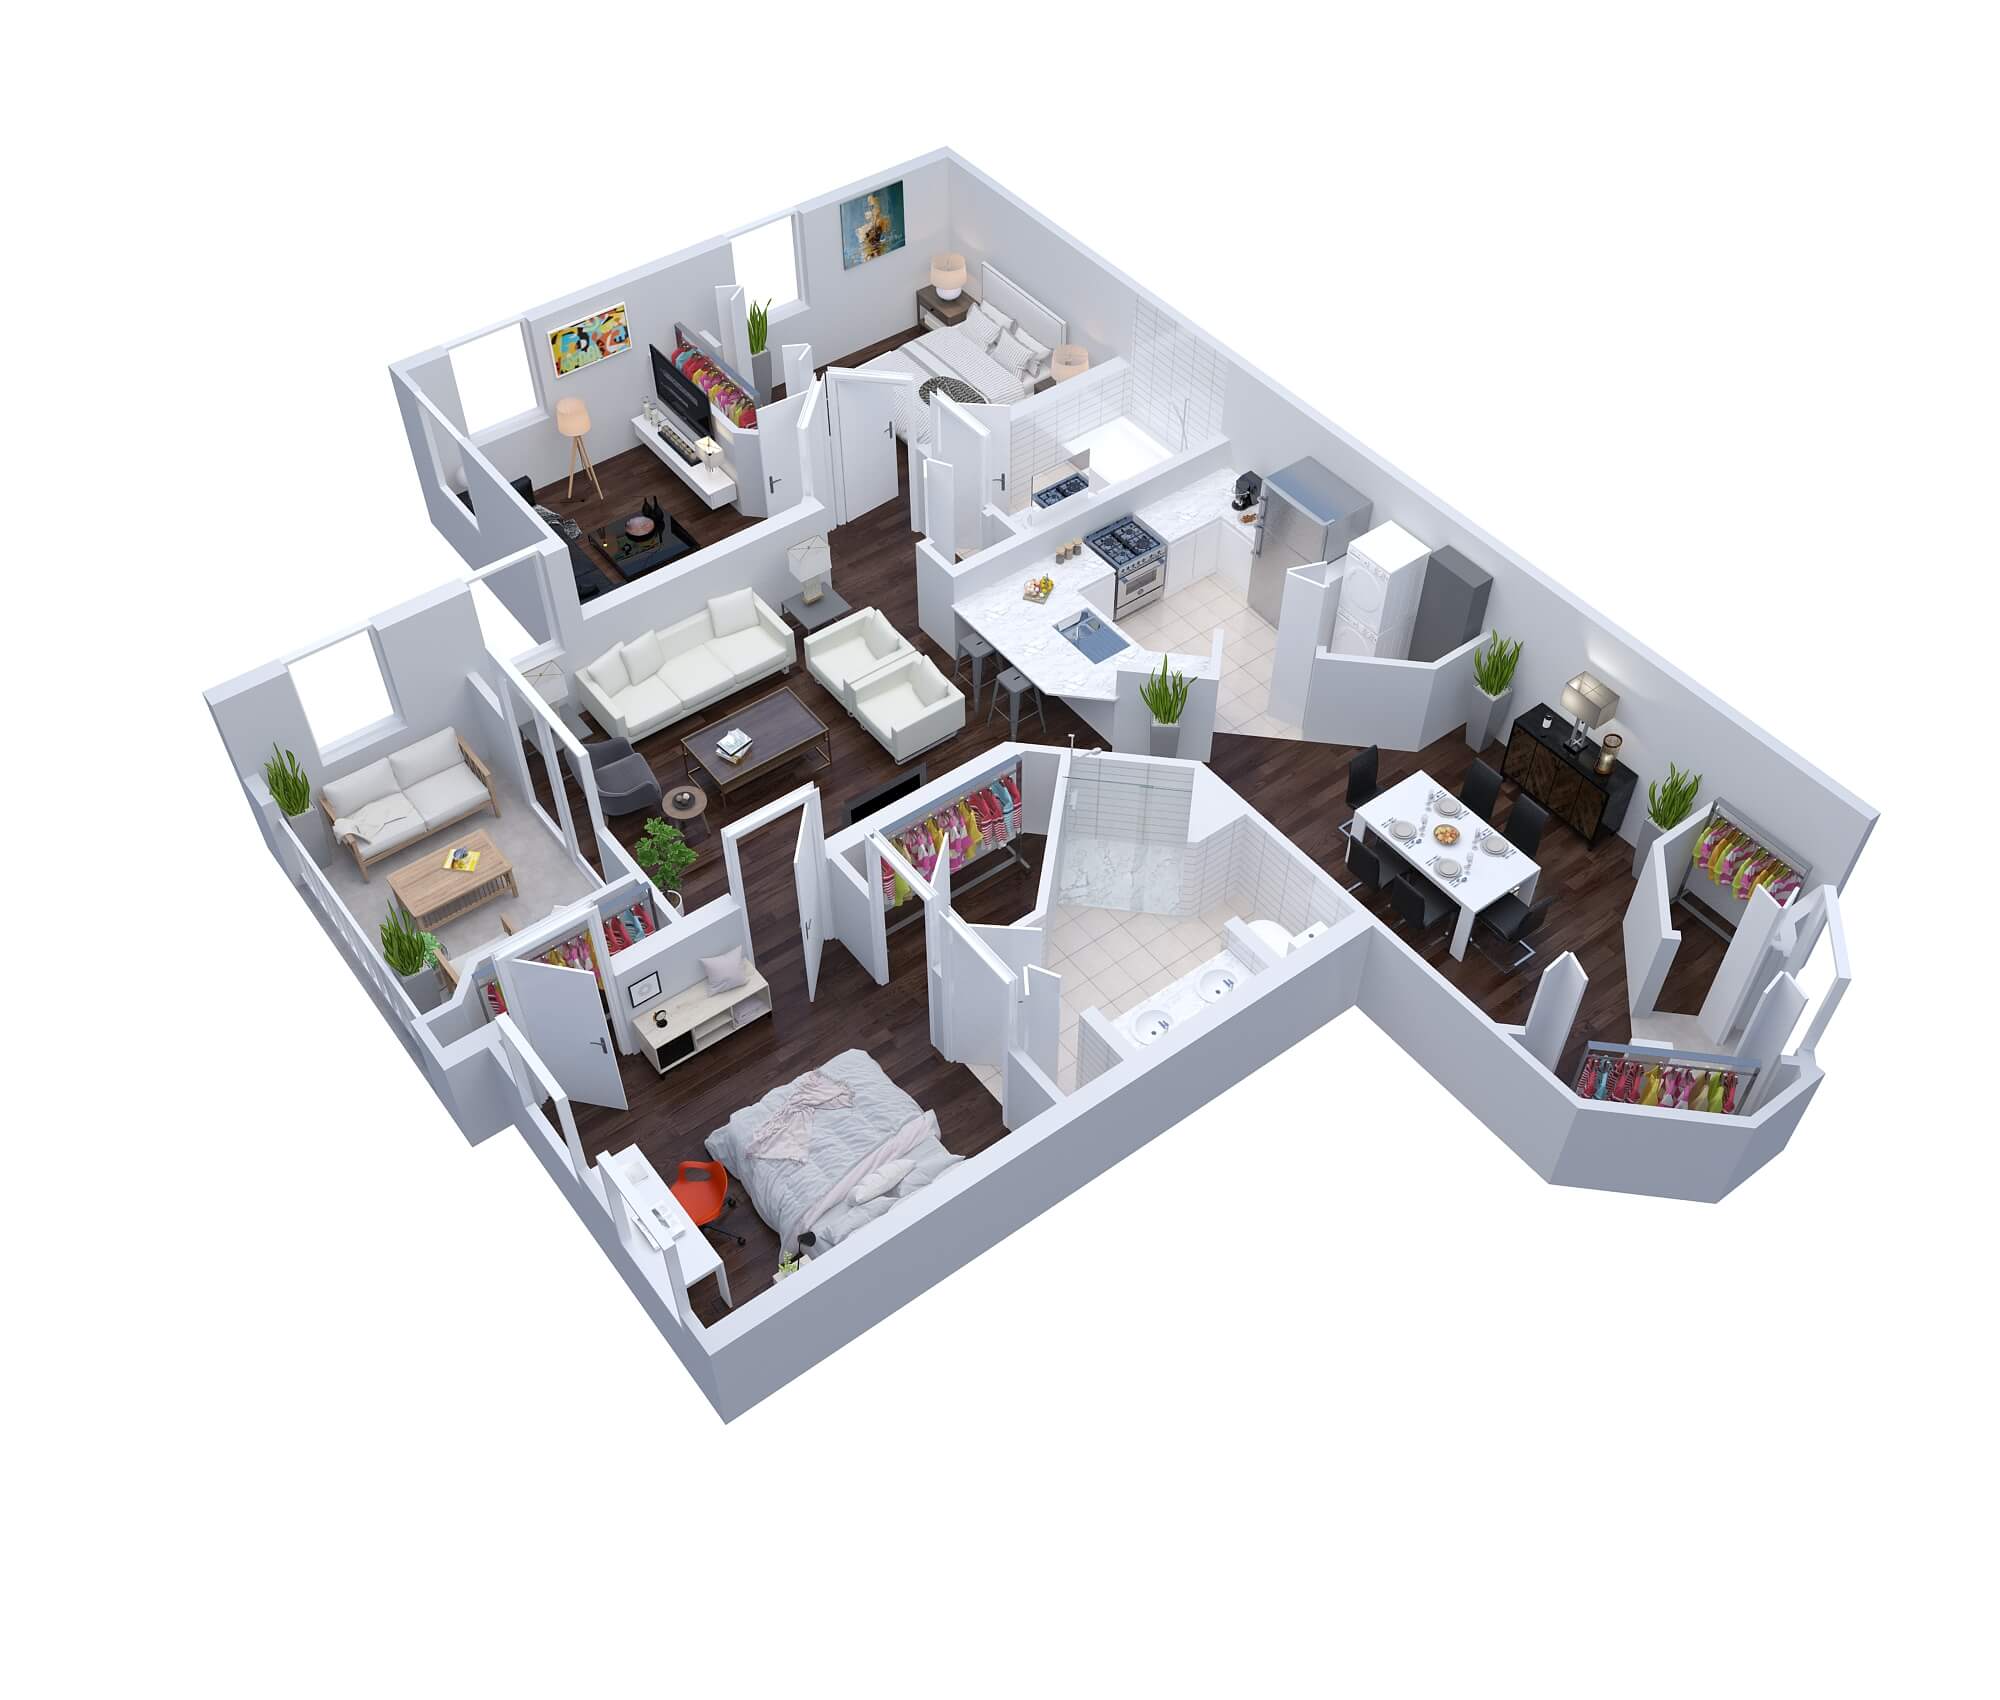 Wyndham - senior living floor plan